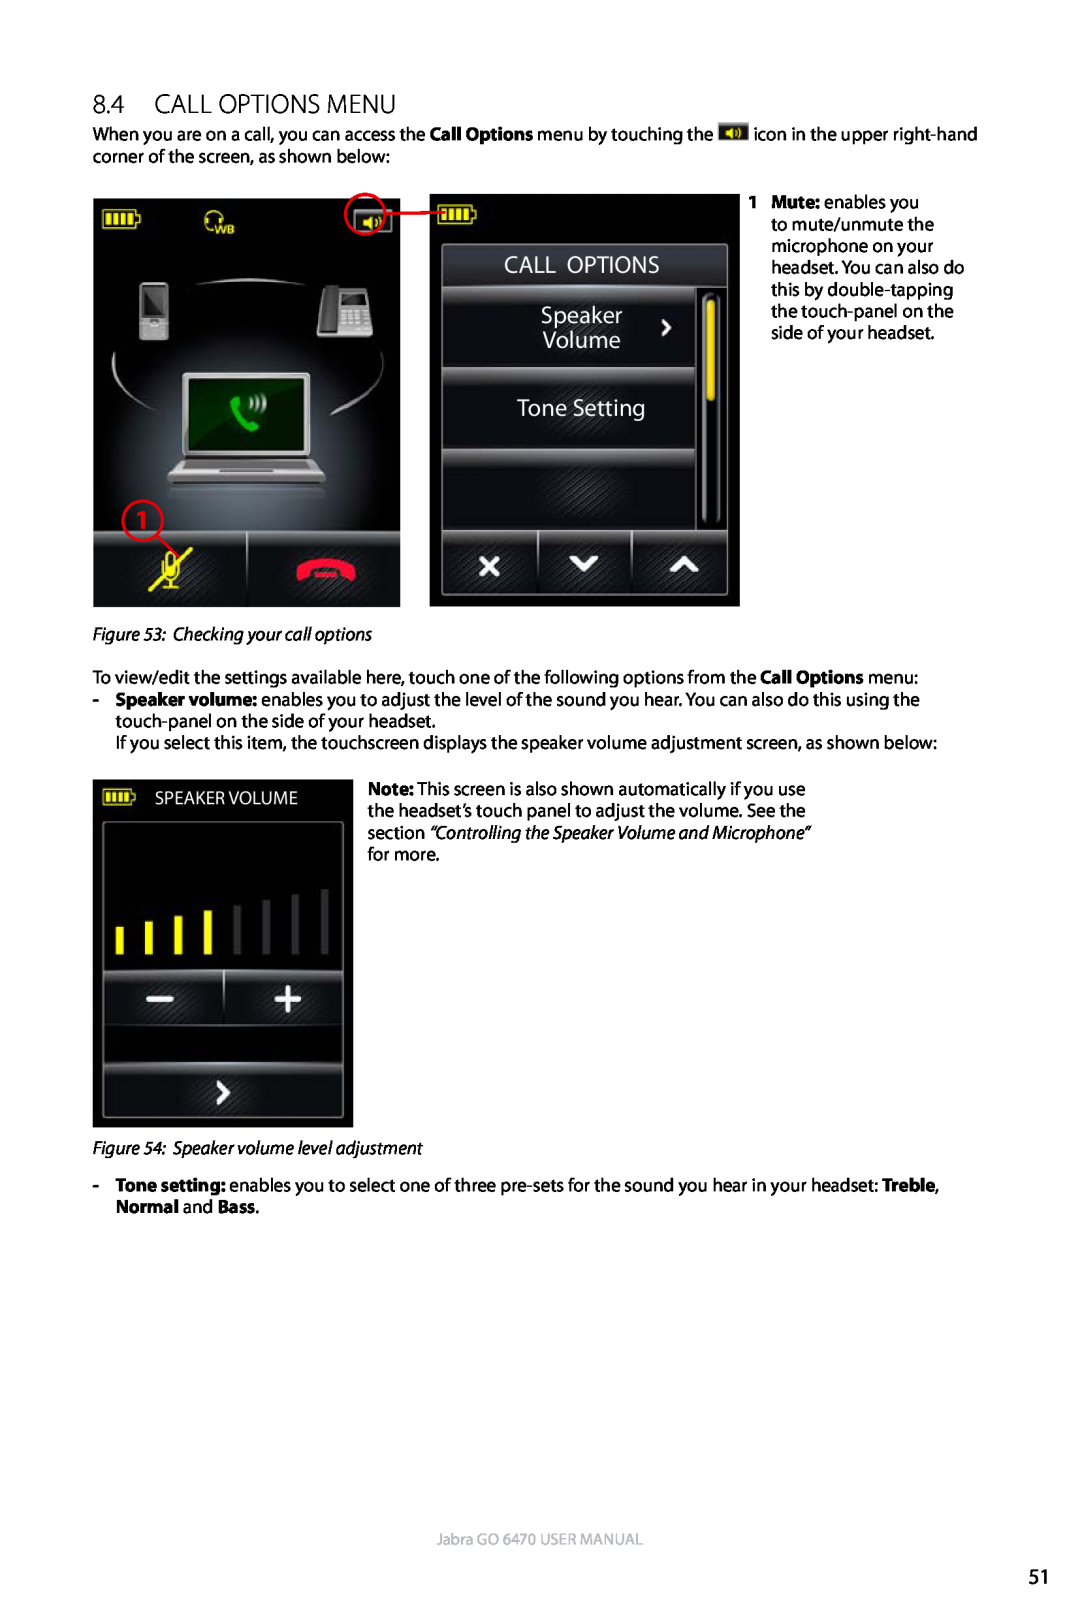 Jabra GO 6470 user manual 8.4Call options menu, CALL OPTIONS Speaker Volume Tone Setting 